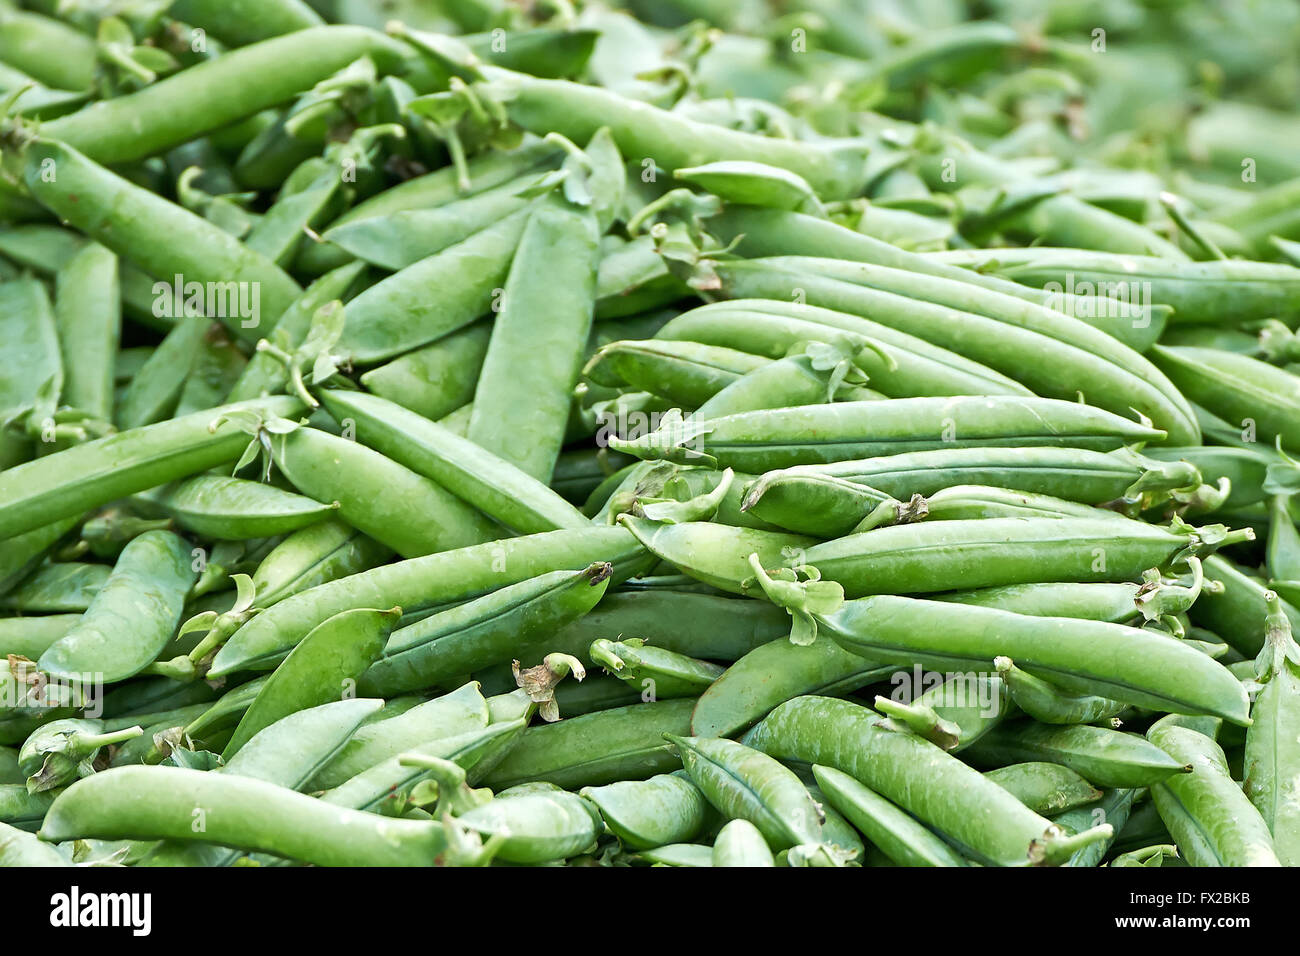 Closeup image of fresh peas (Pisum sativum) Stock Photo